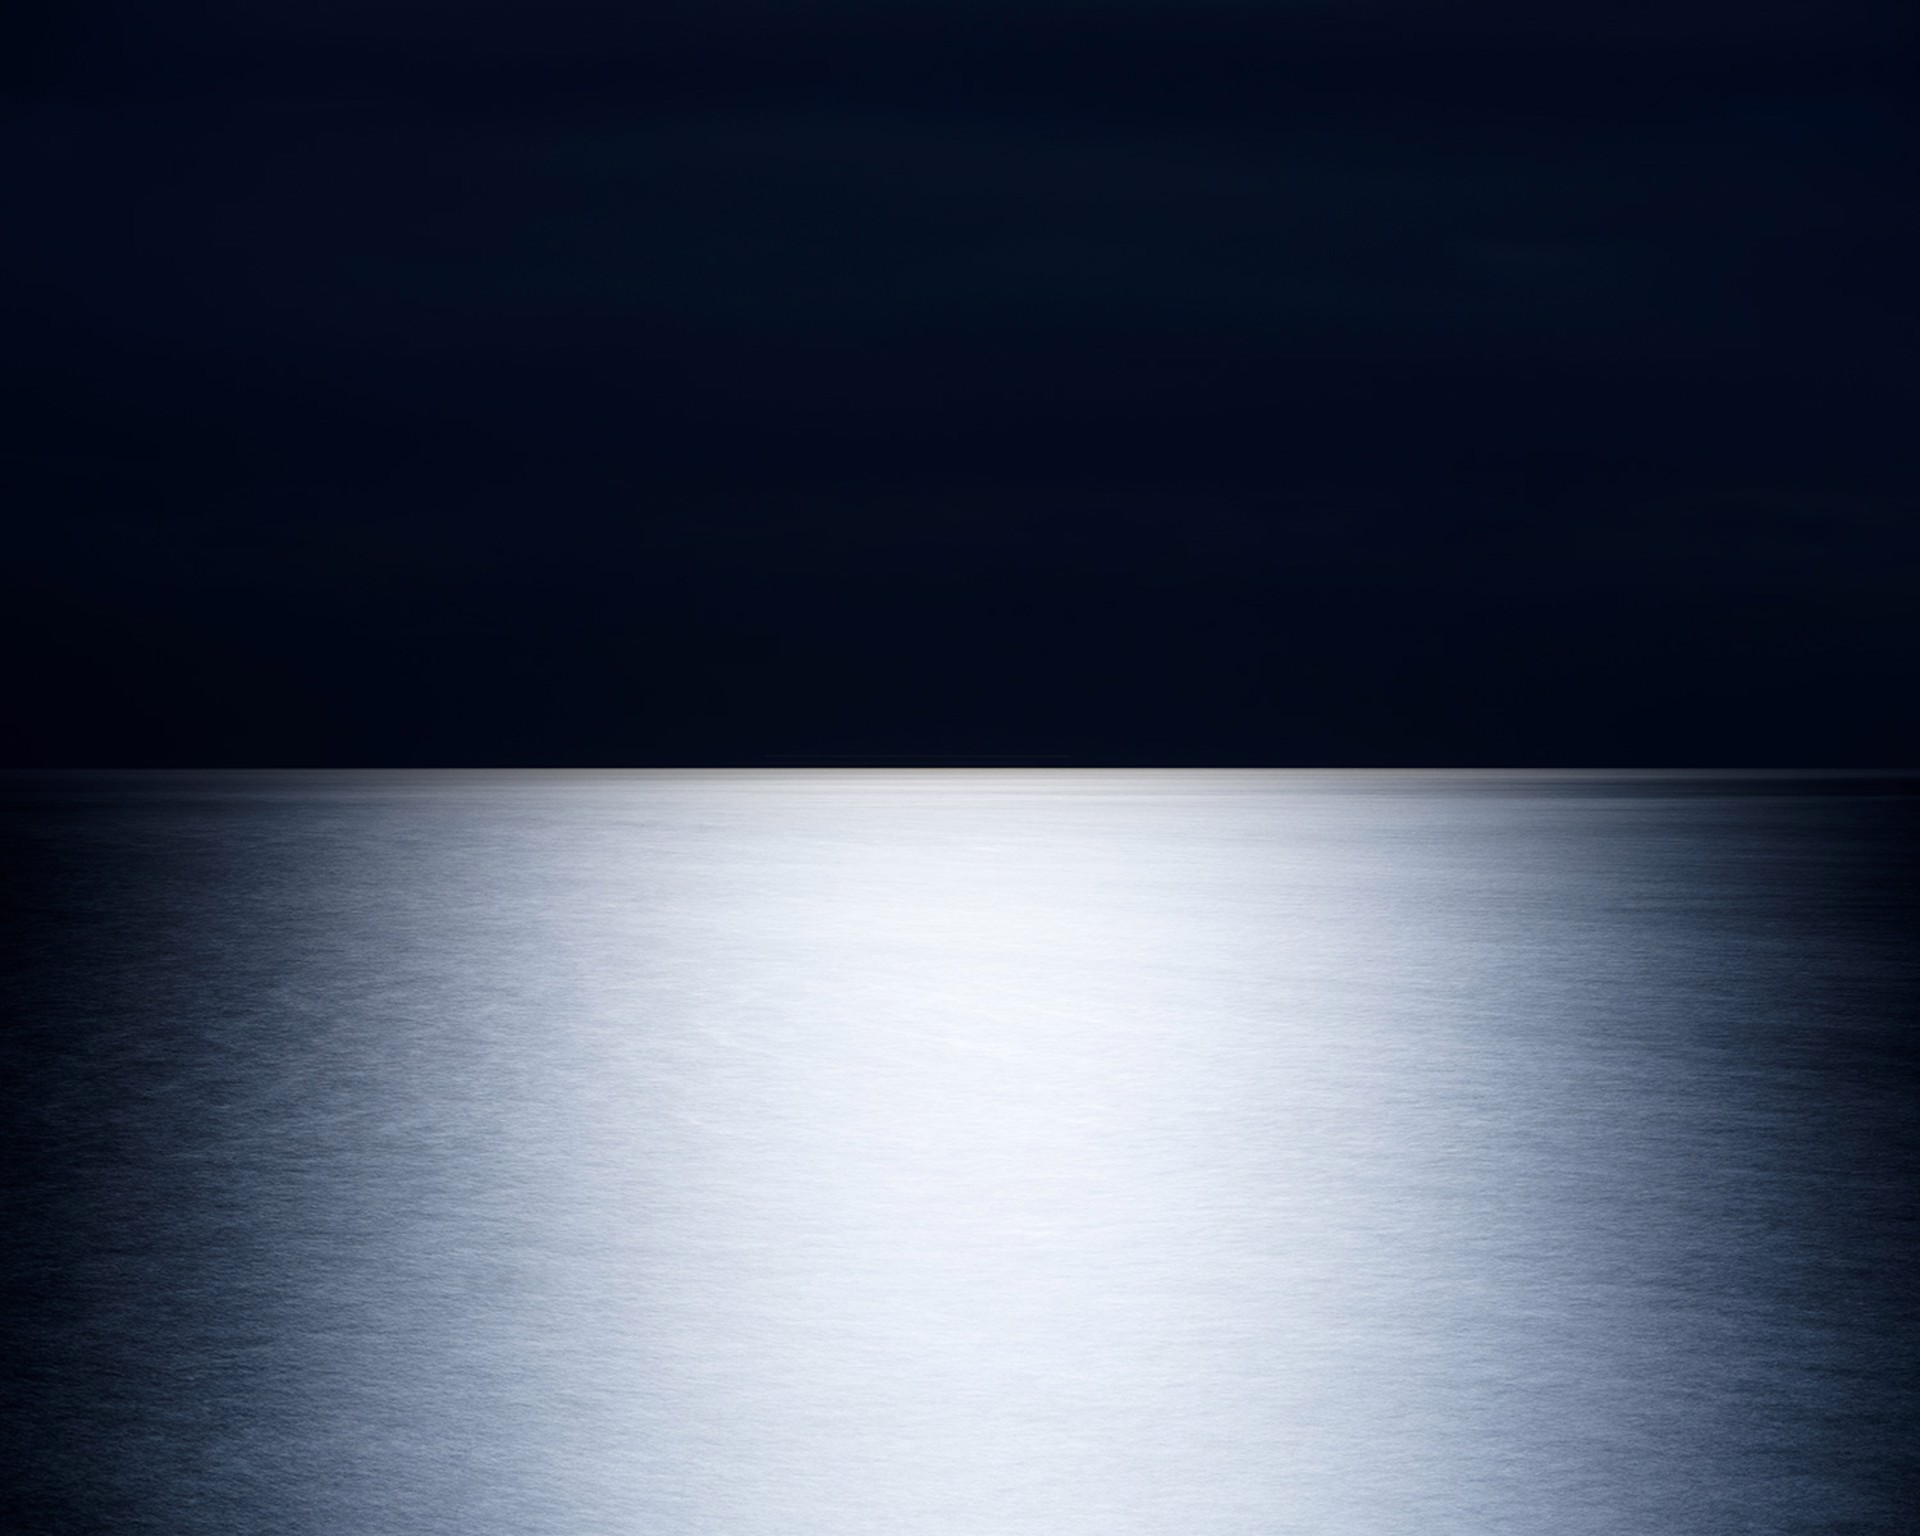 Horizon #67, Super Moon by Jonathan Smith